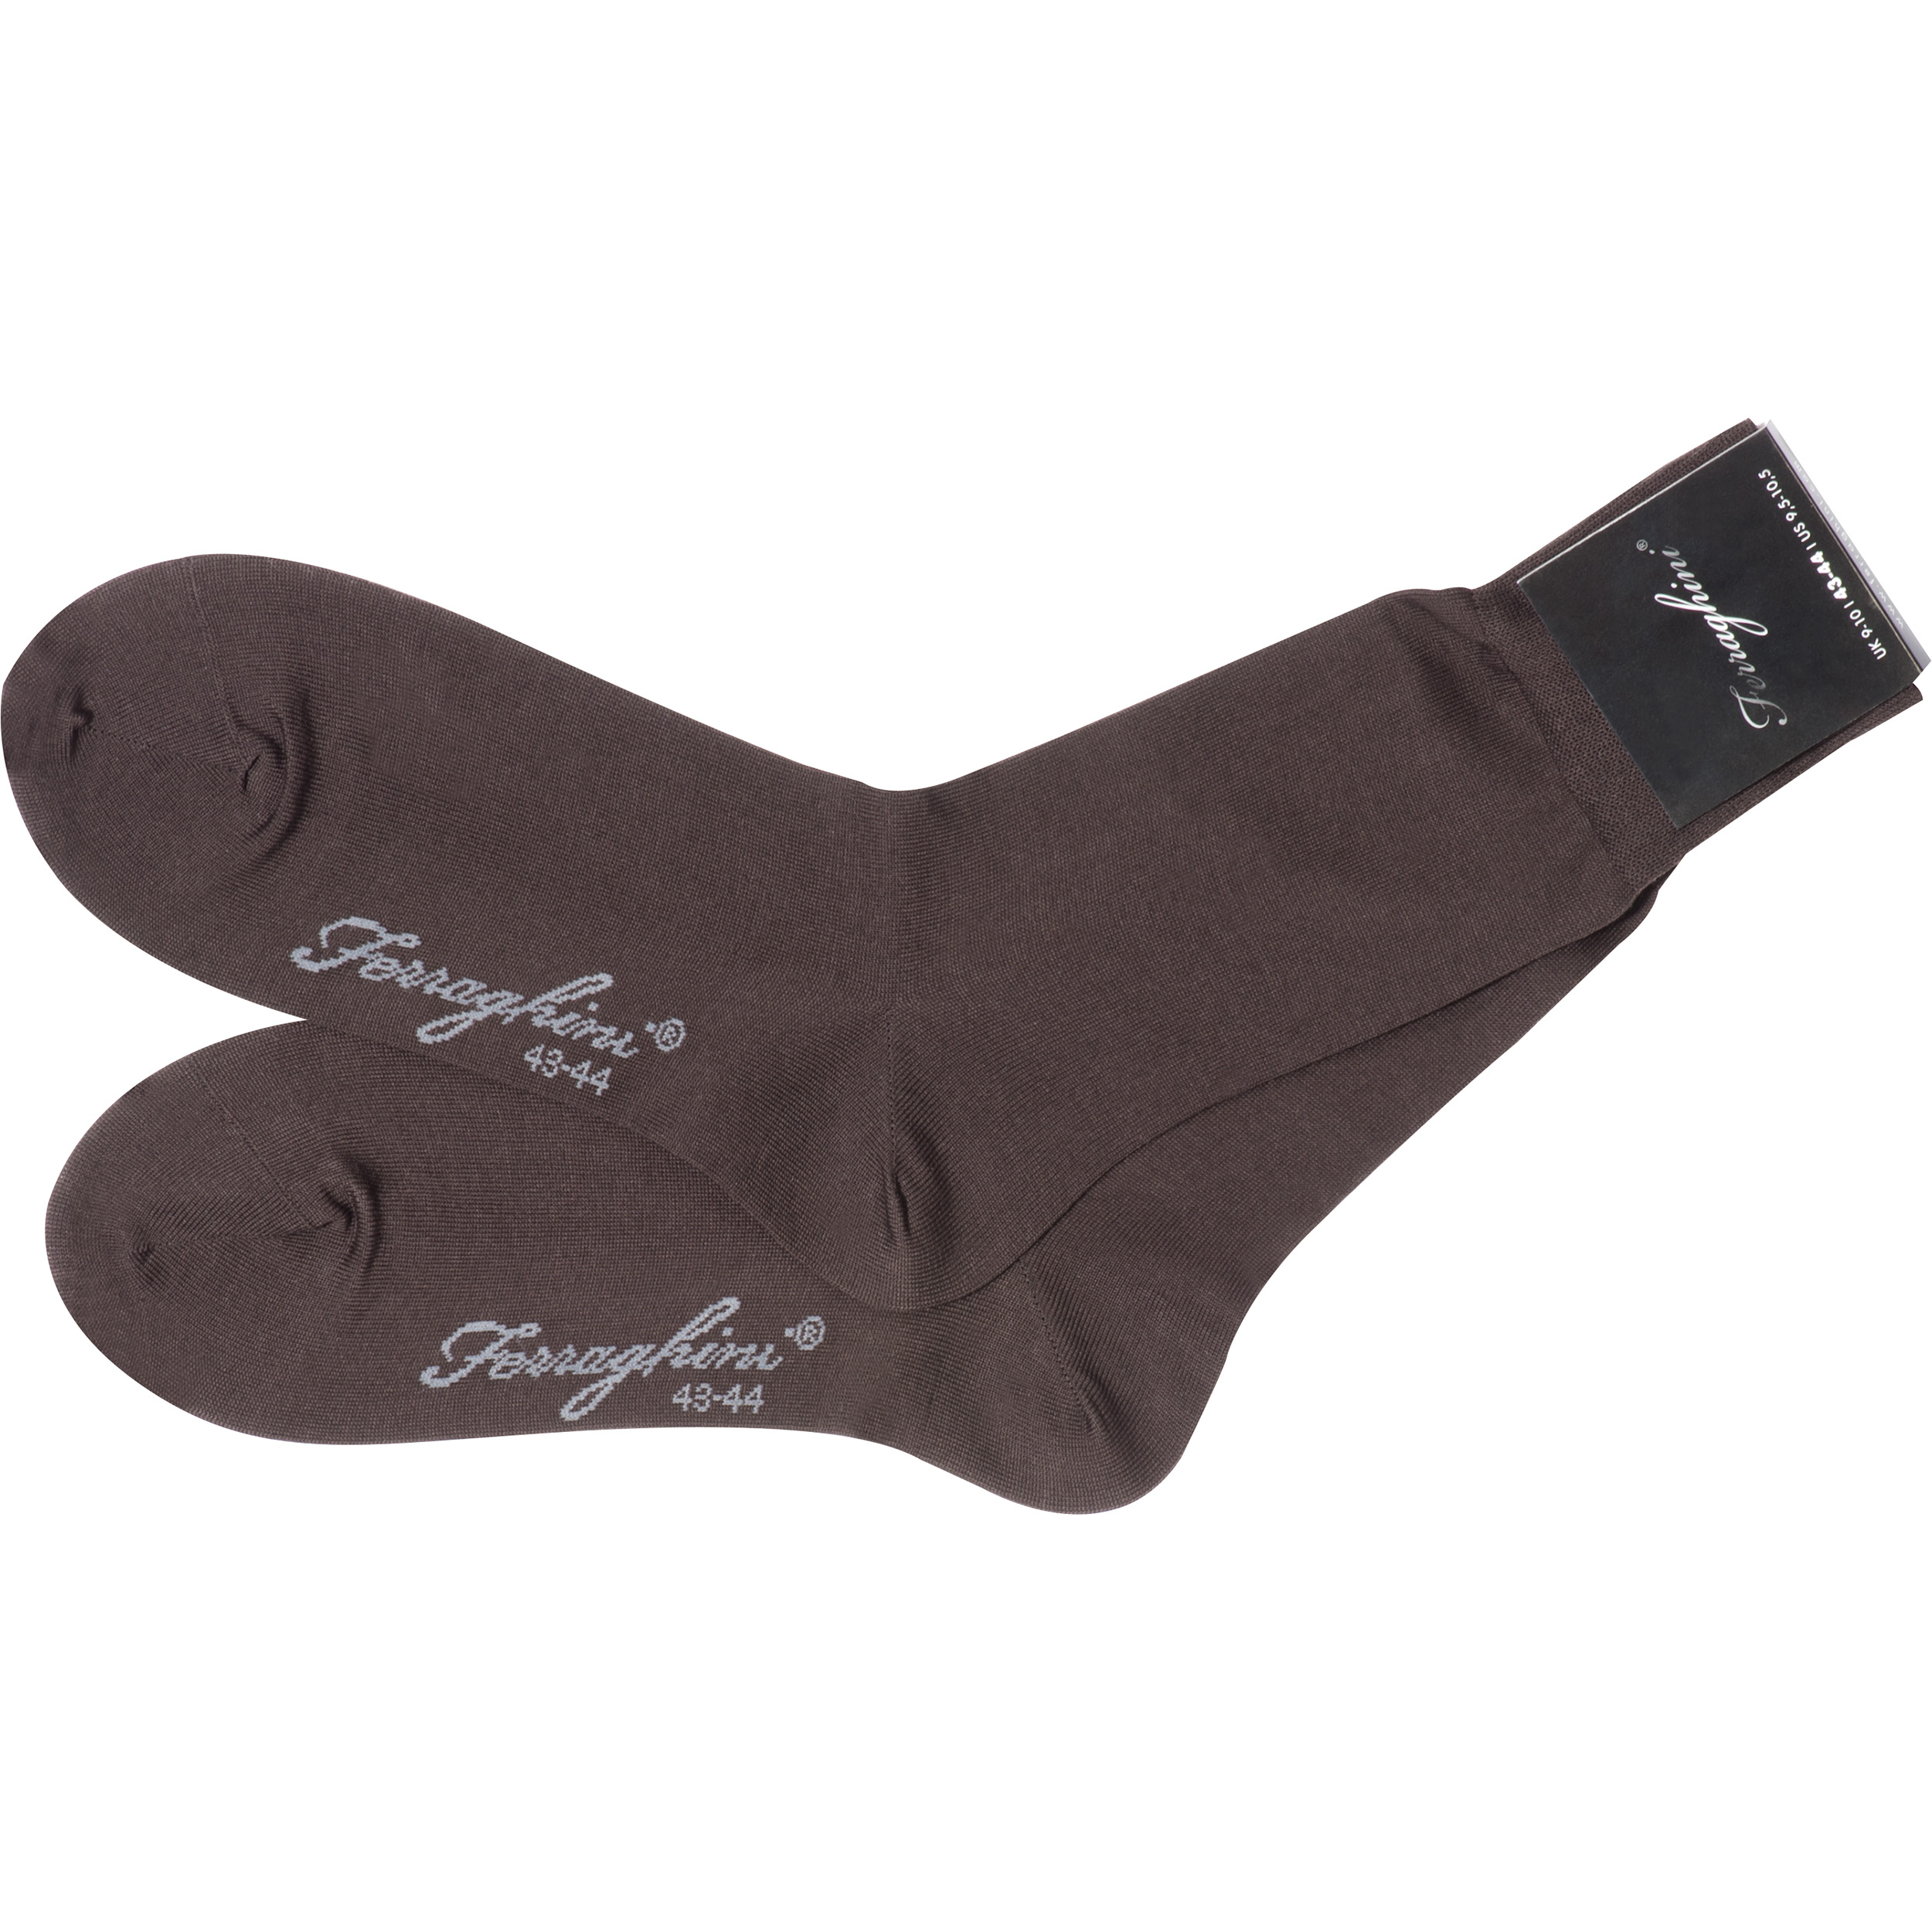 Ferraghini Noble Socks - Aston Tirrold - Goodwood